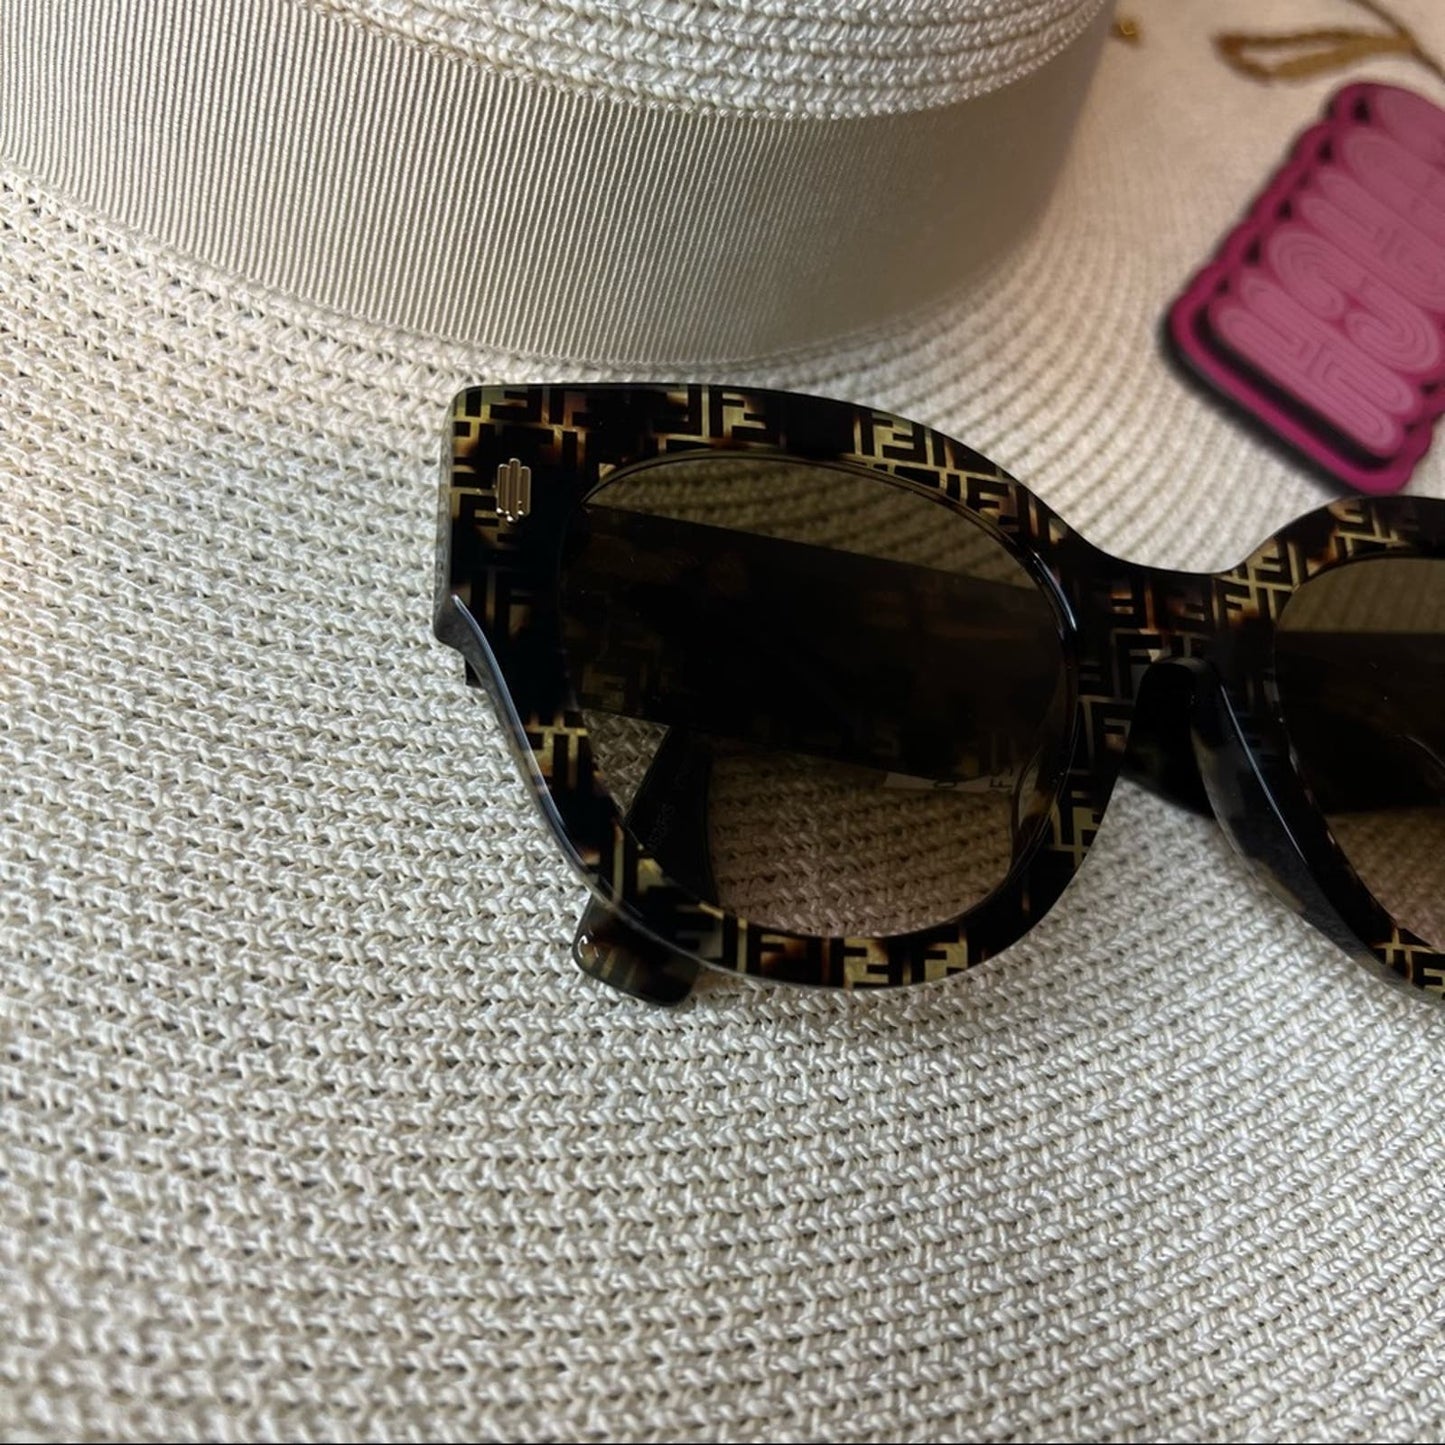 Fendi Brown & Black Yellow Havana Cat Eye Sunglasses, “FF0452/F/S 53mm”